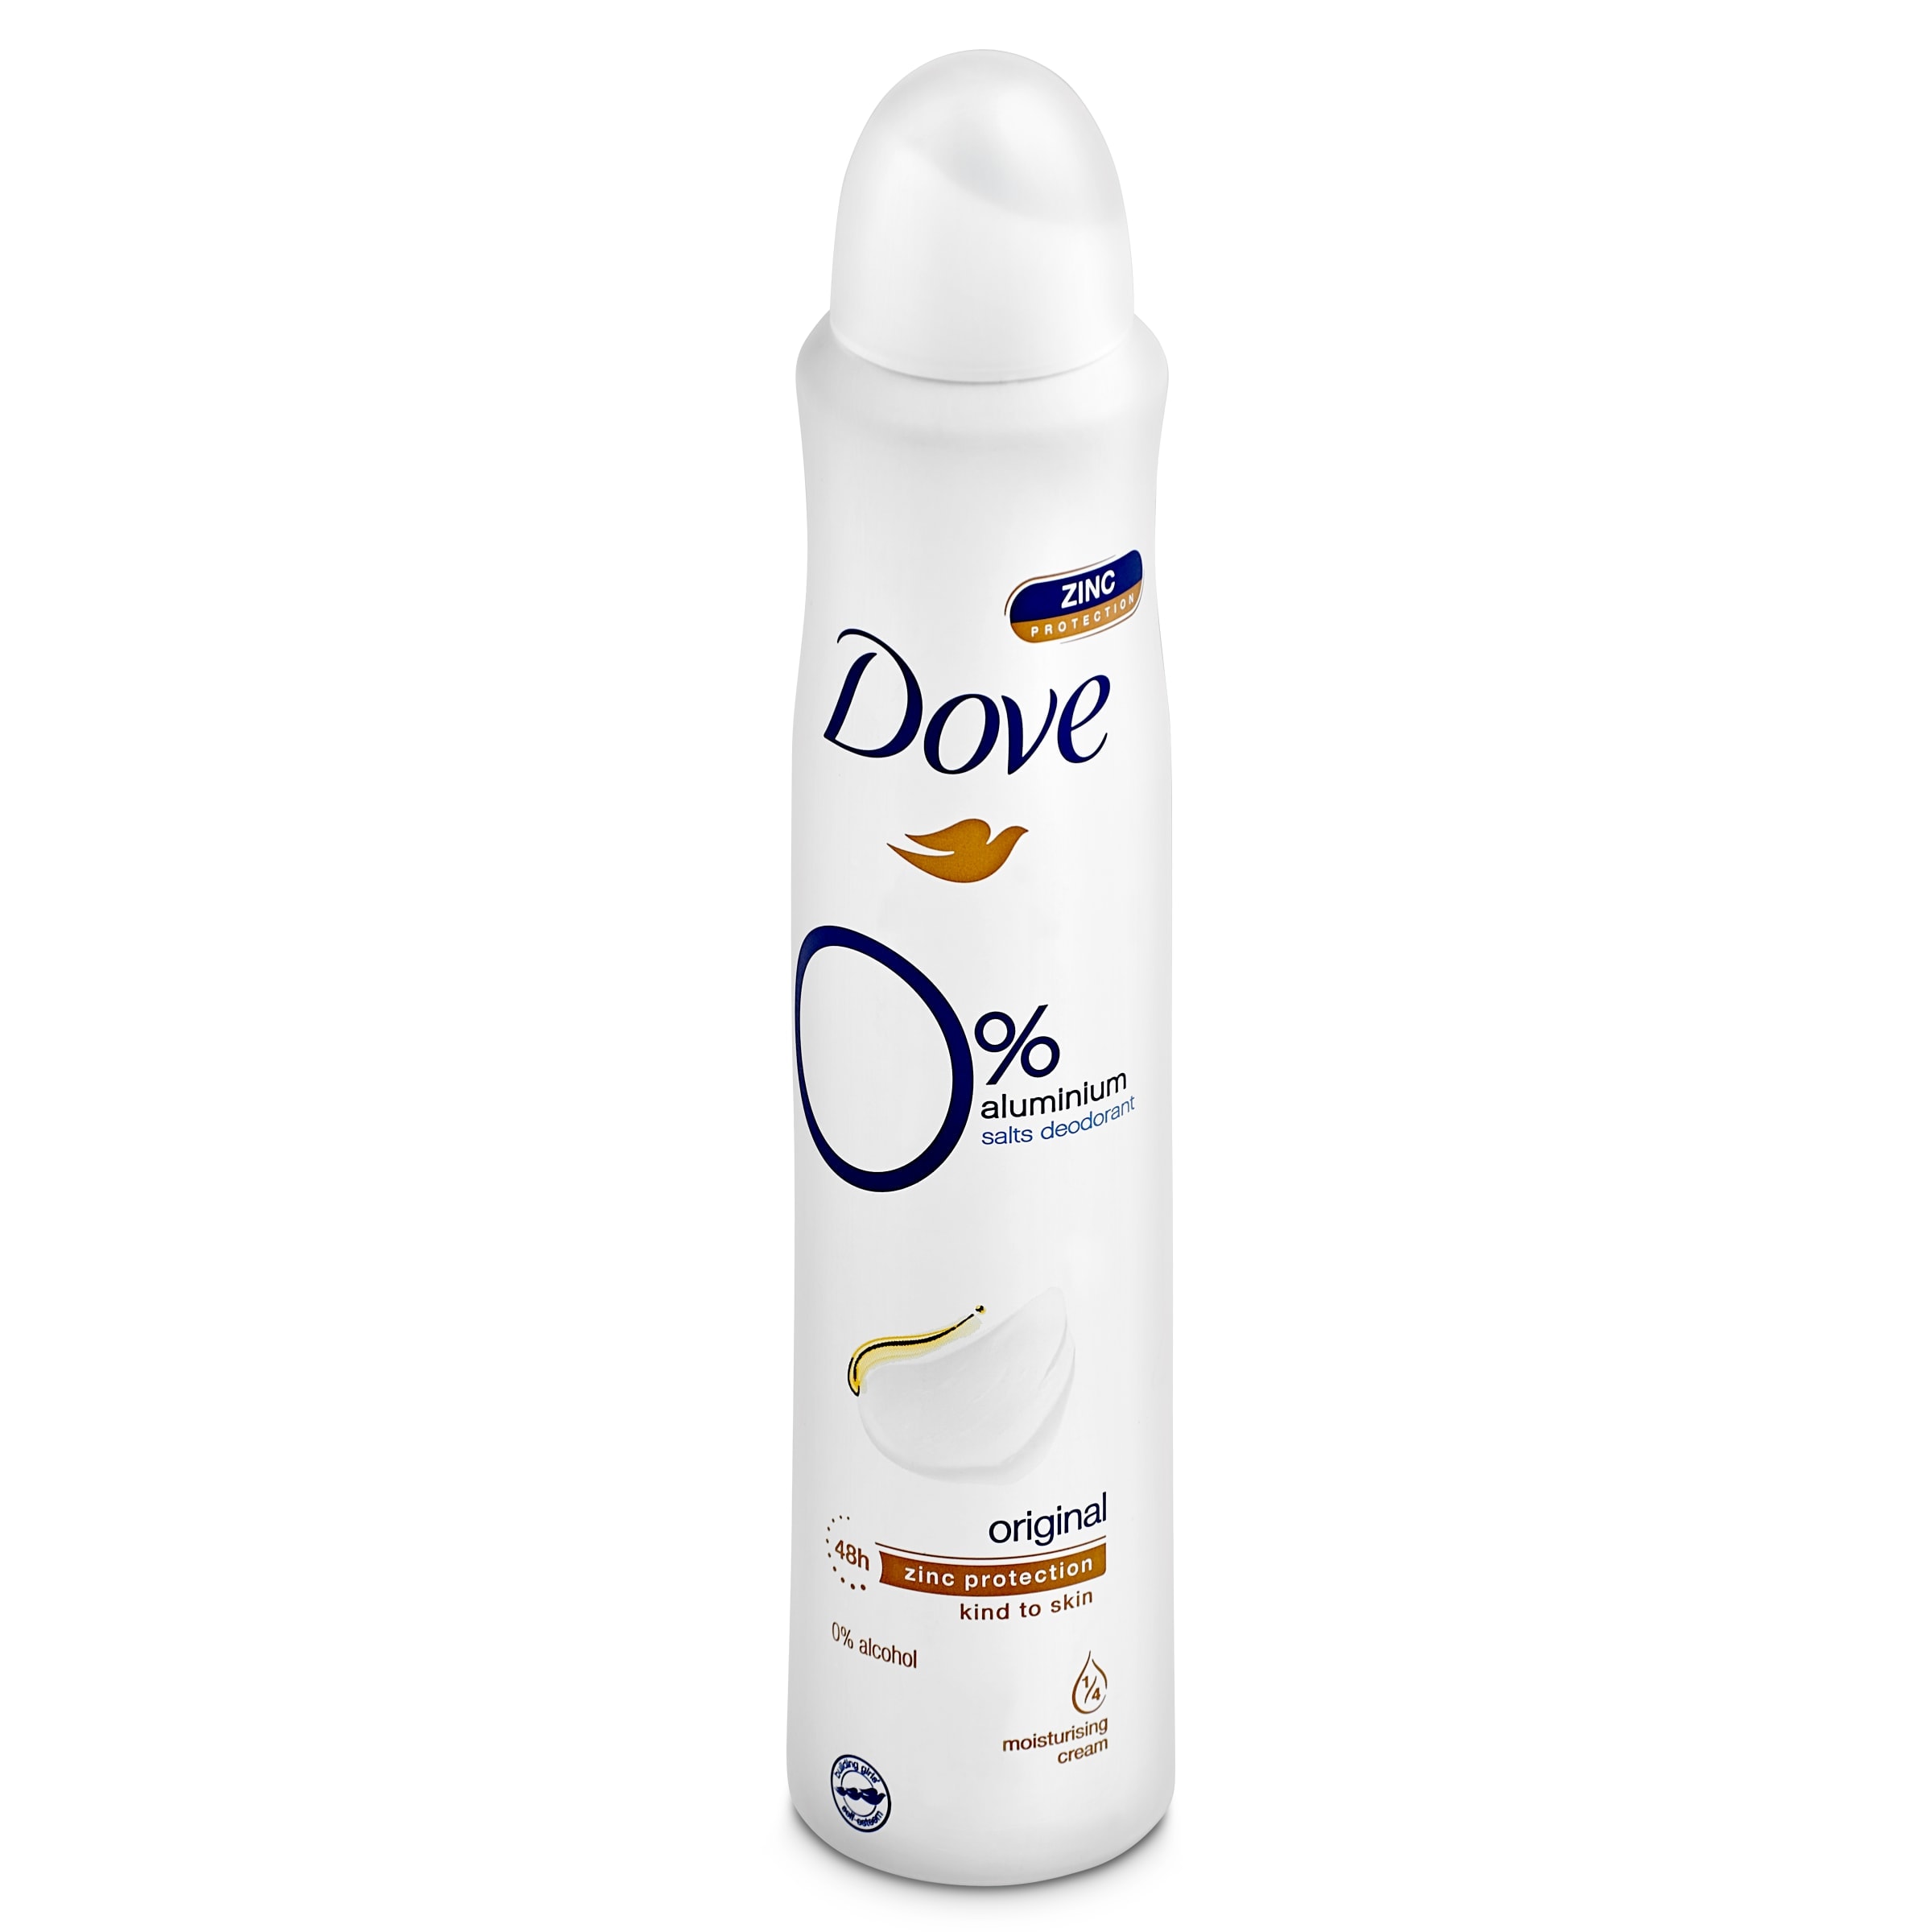 Desodorante original sin alcohol 0% sales de aluminio Dove spray 200 ml -  Supermercados DIA